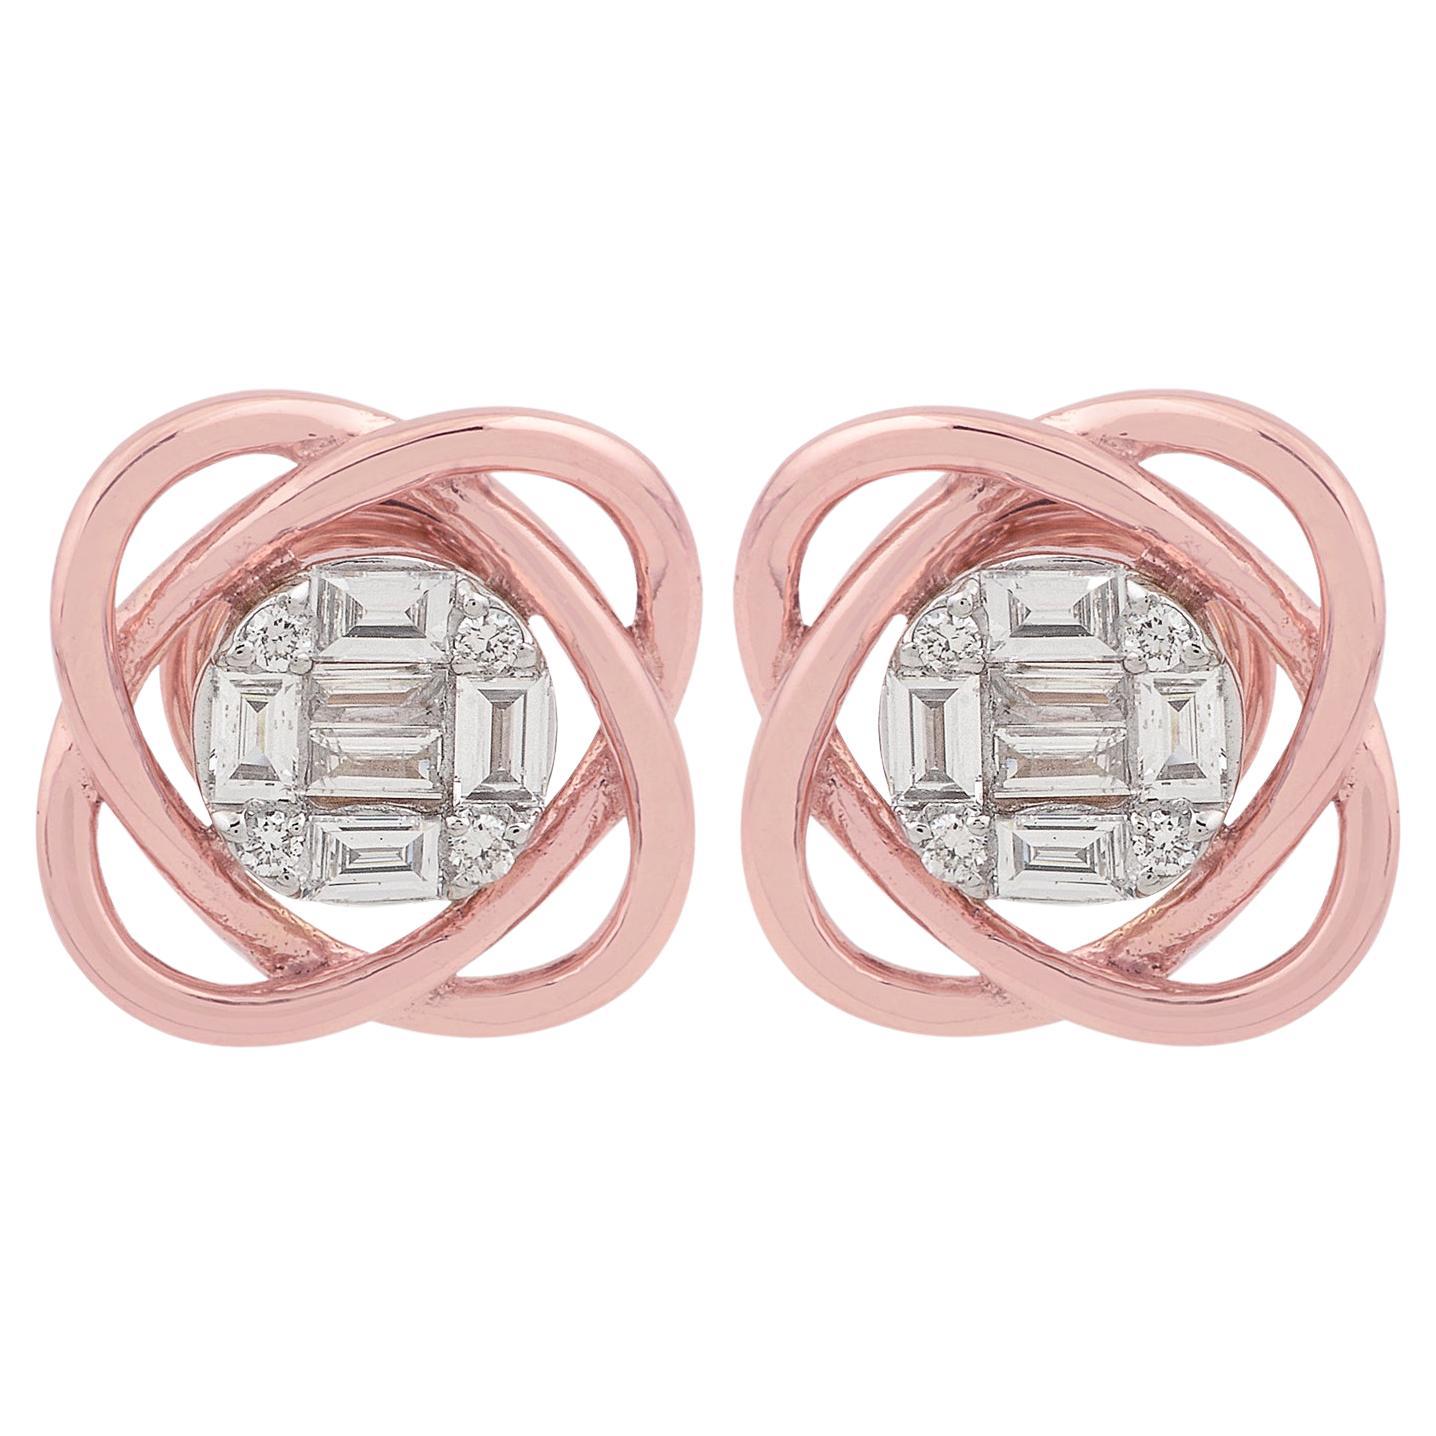 SI Clarity HI Color Baguette Diamond Flower Stud Earrings 14k Rose Gold Jewelry